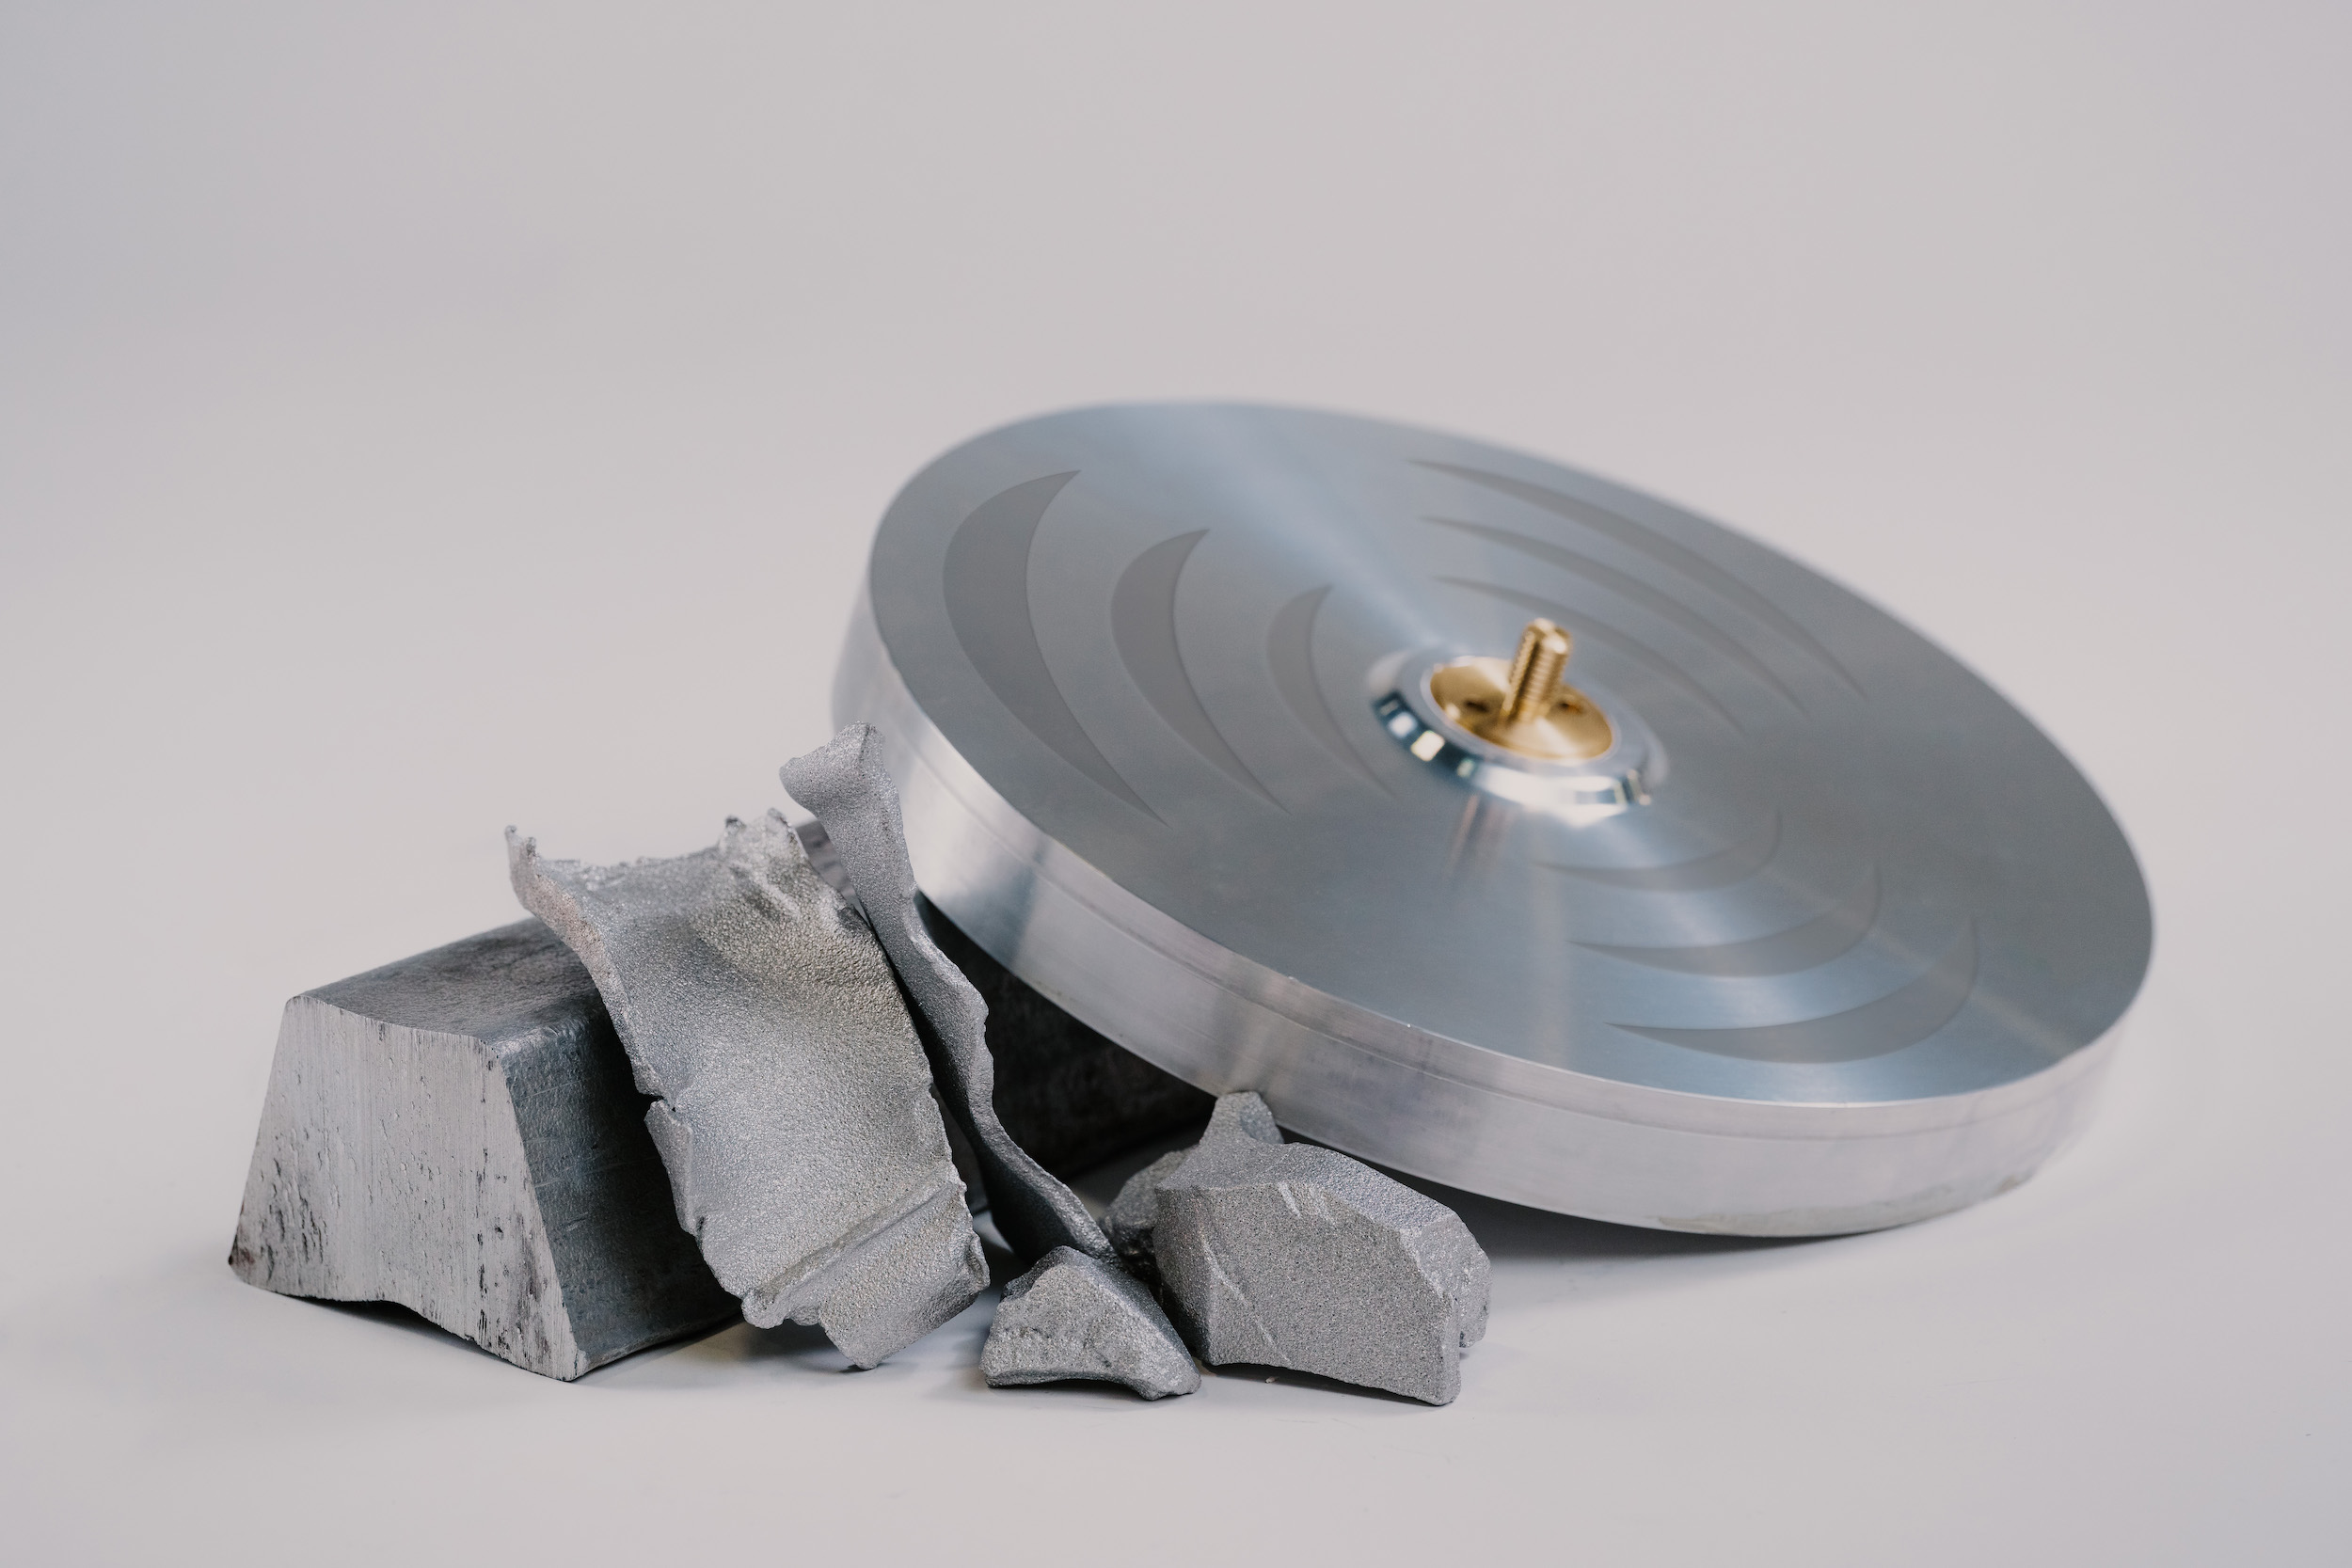 AlumaPower aluminum disc leaning up against chunks of aluminum